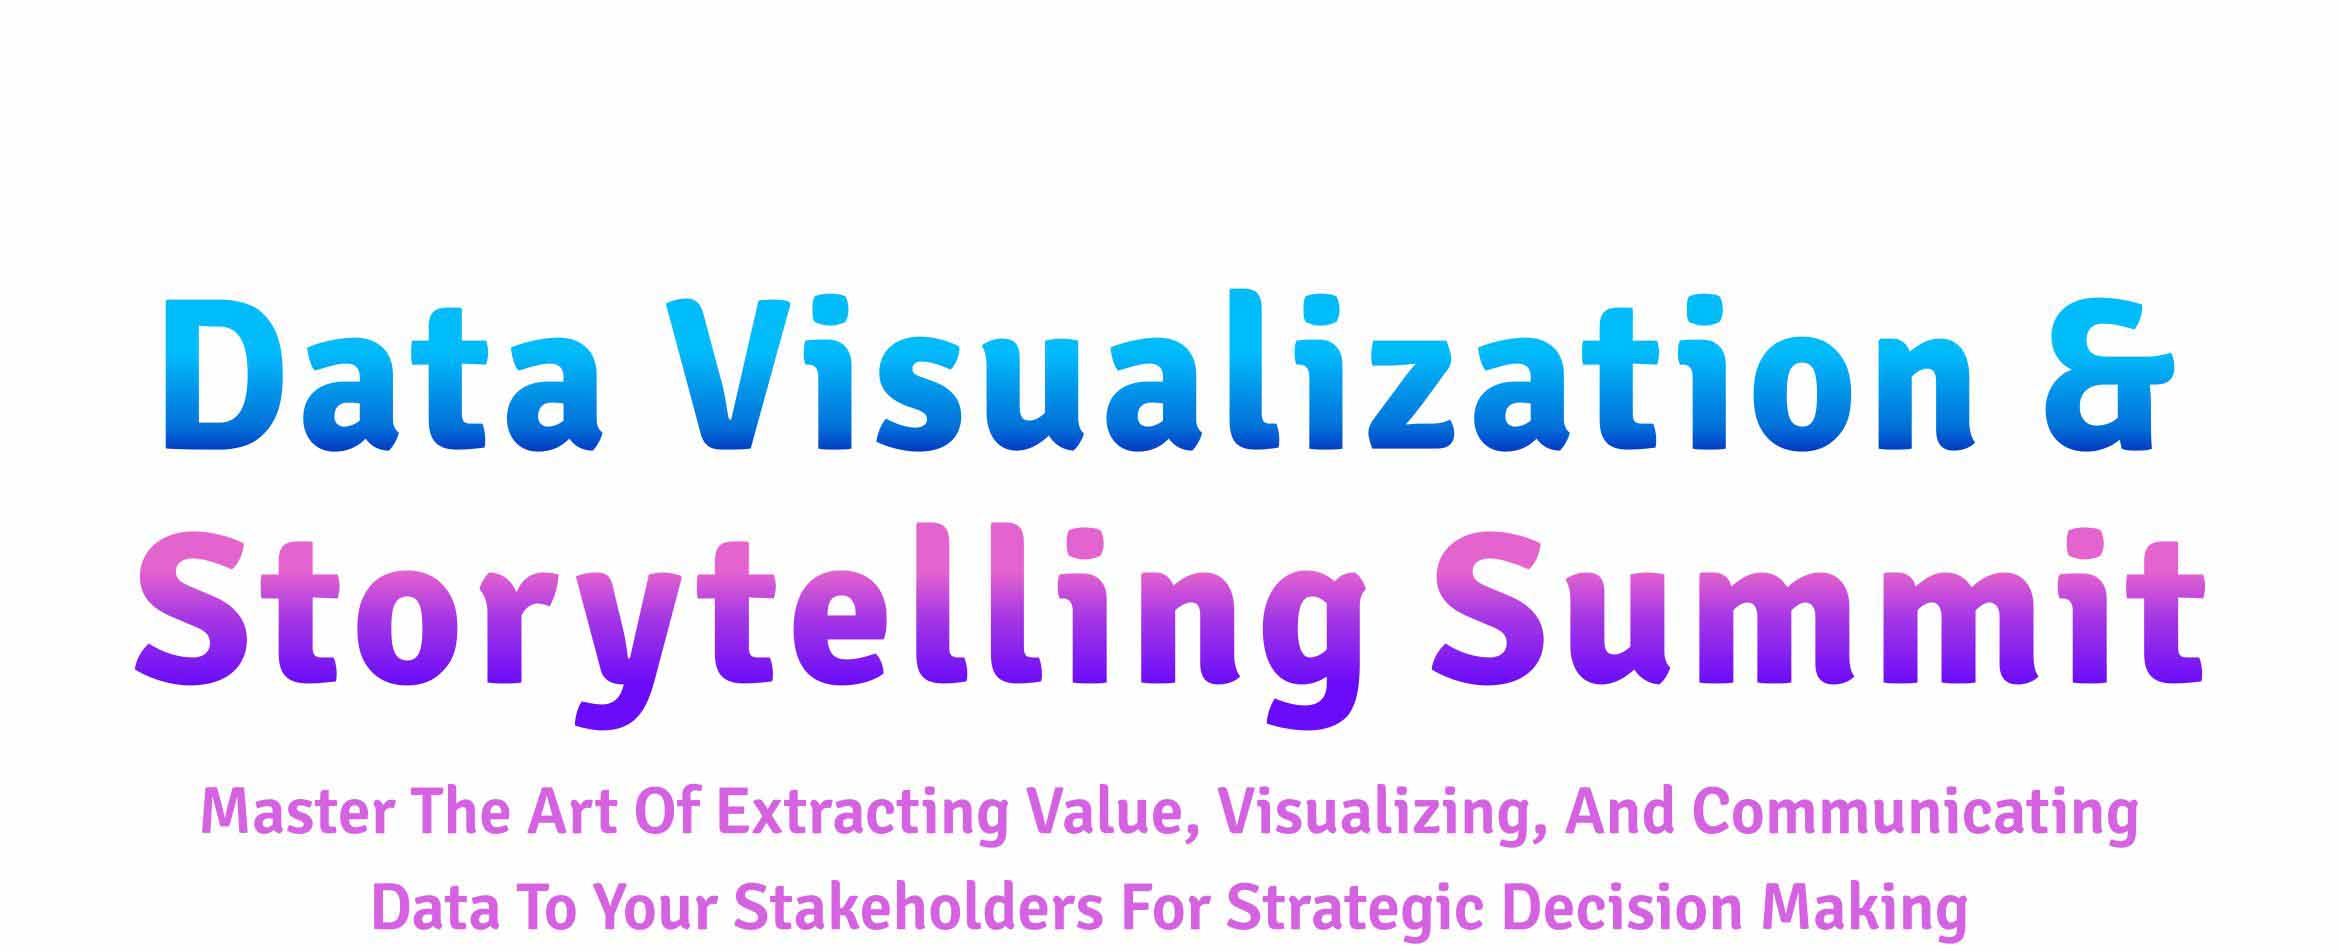 Data Visualization and Storytelling Digital Summit